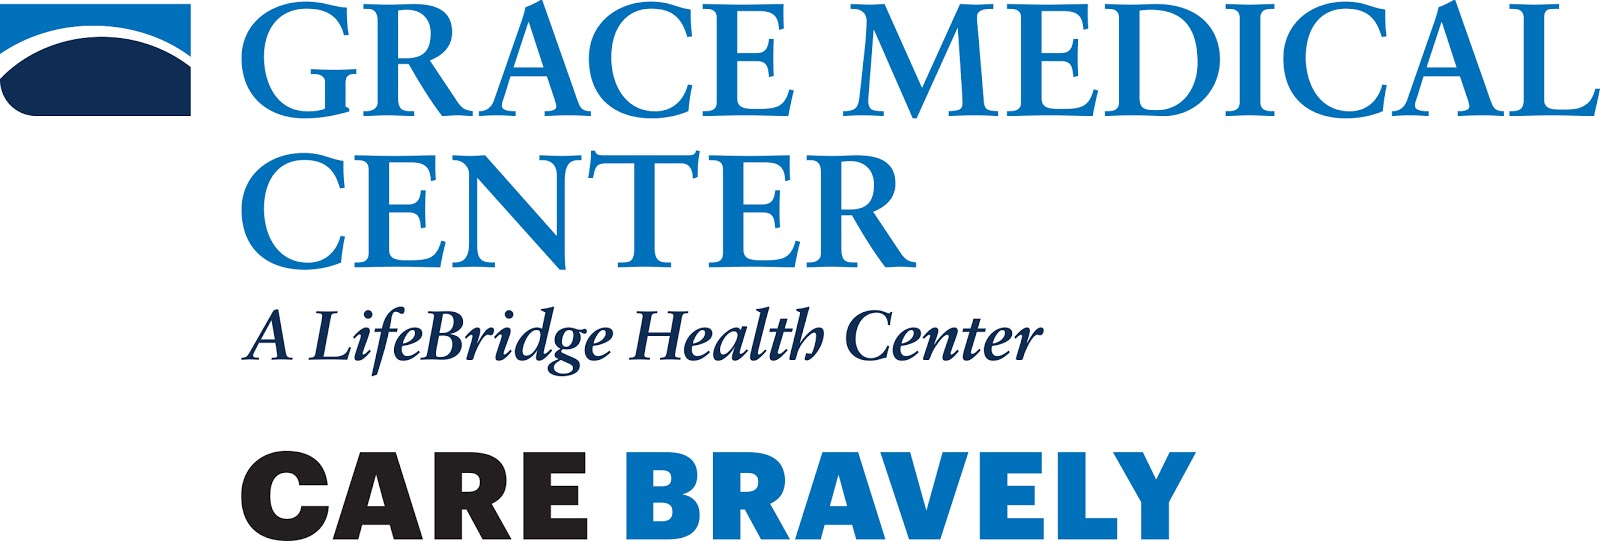 Grace Medical Center Family Health & Wellness